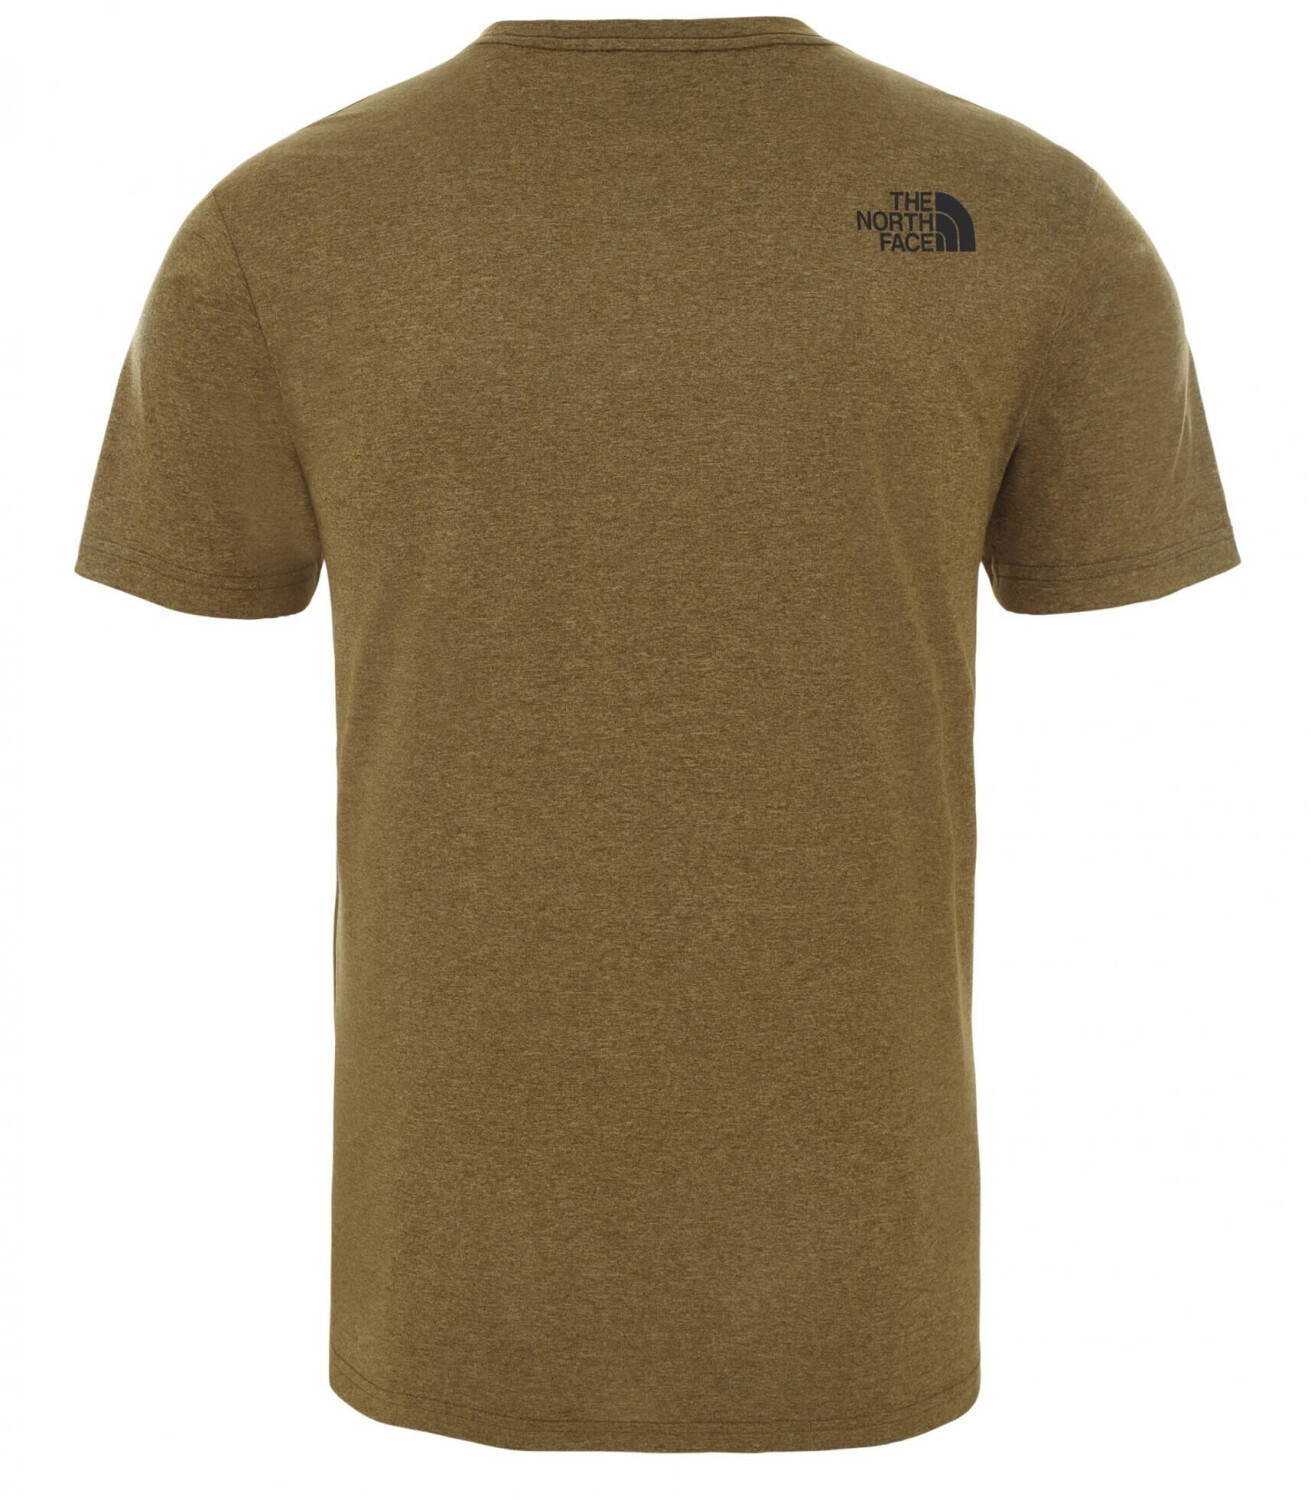 The North Face Reaxion Easy T-Shirt Men (4CDV) fir green heather a € 25 ...